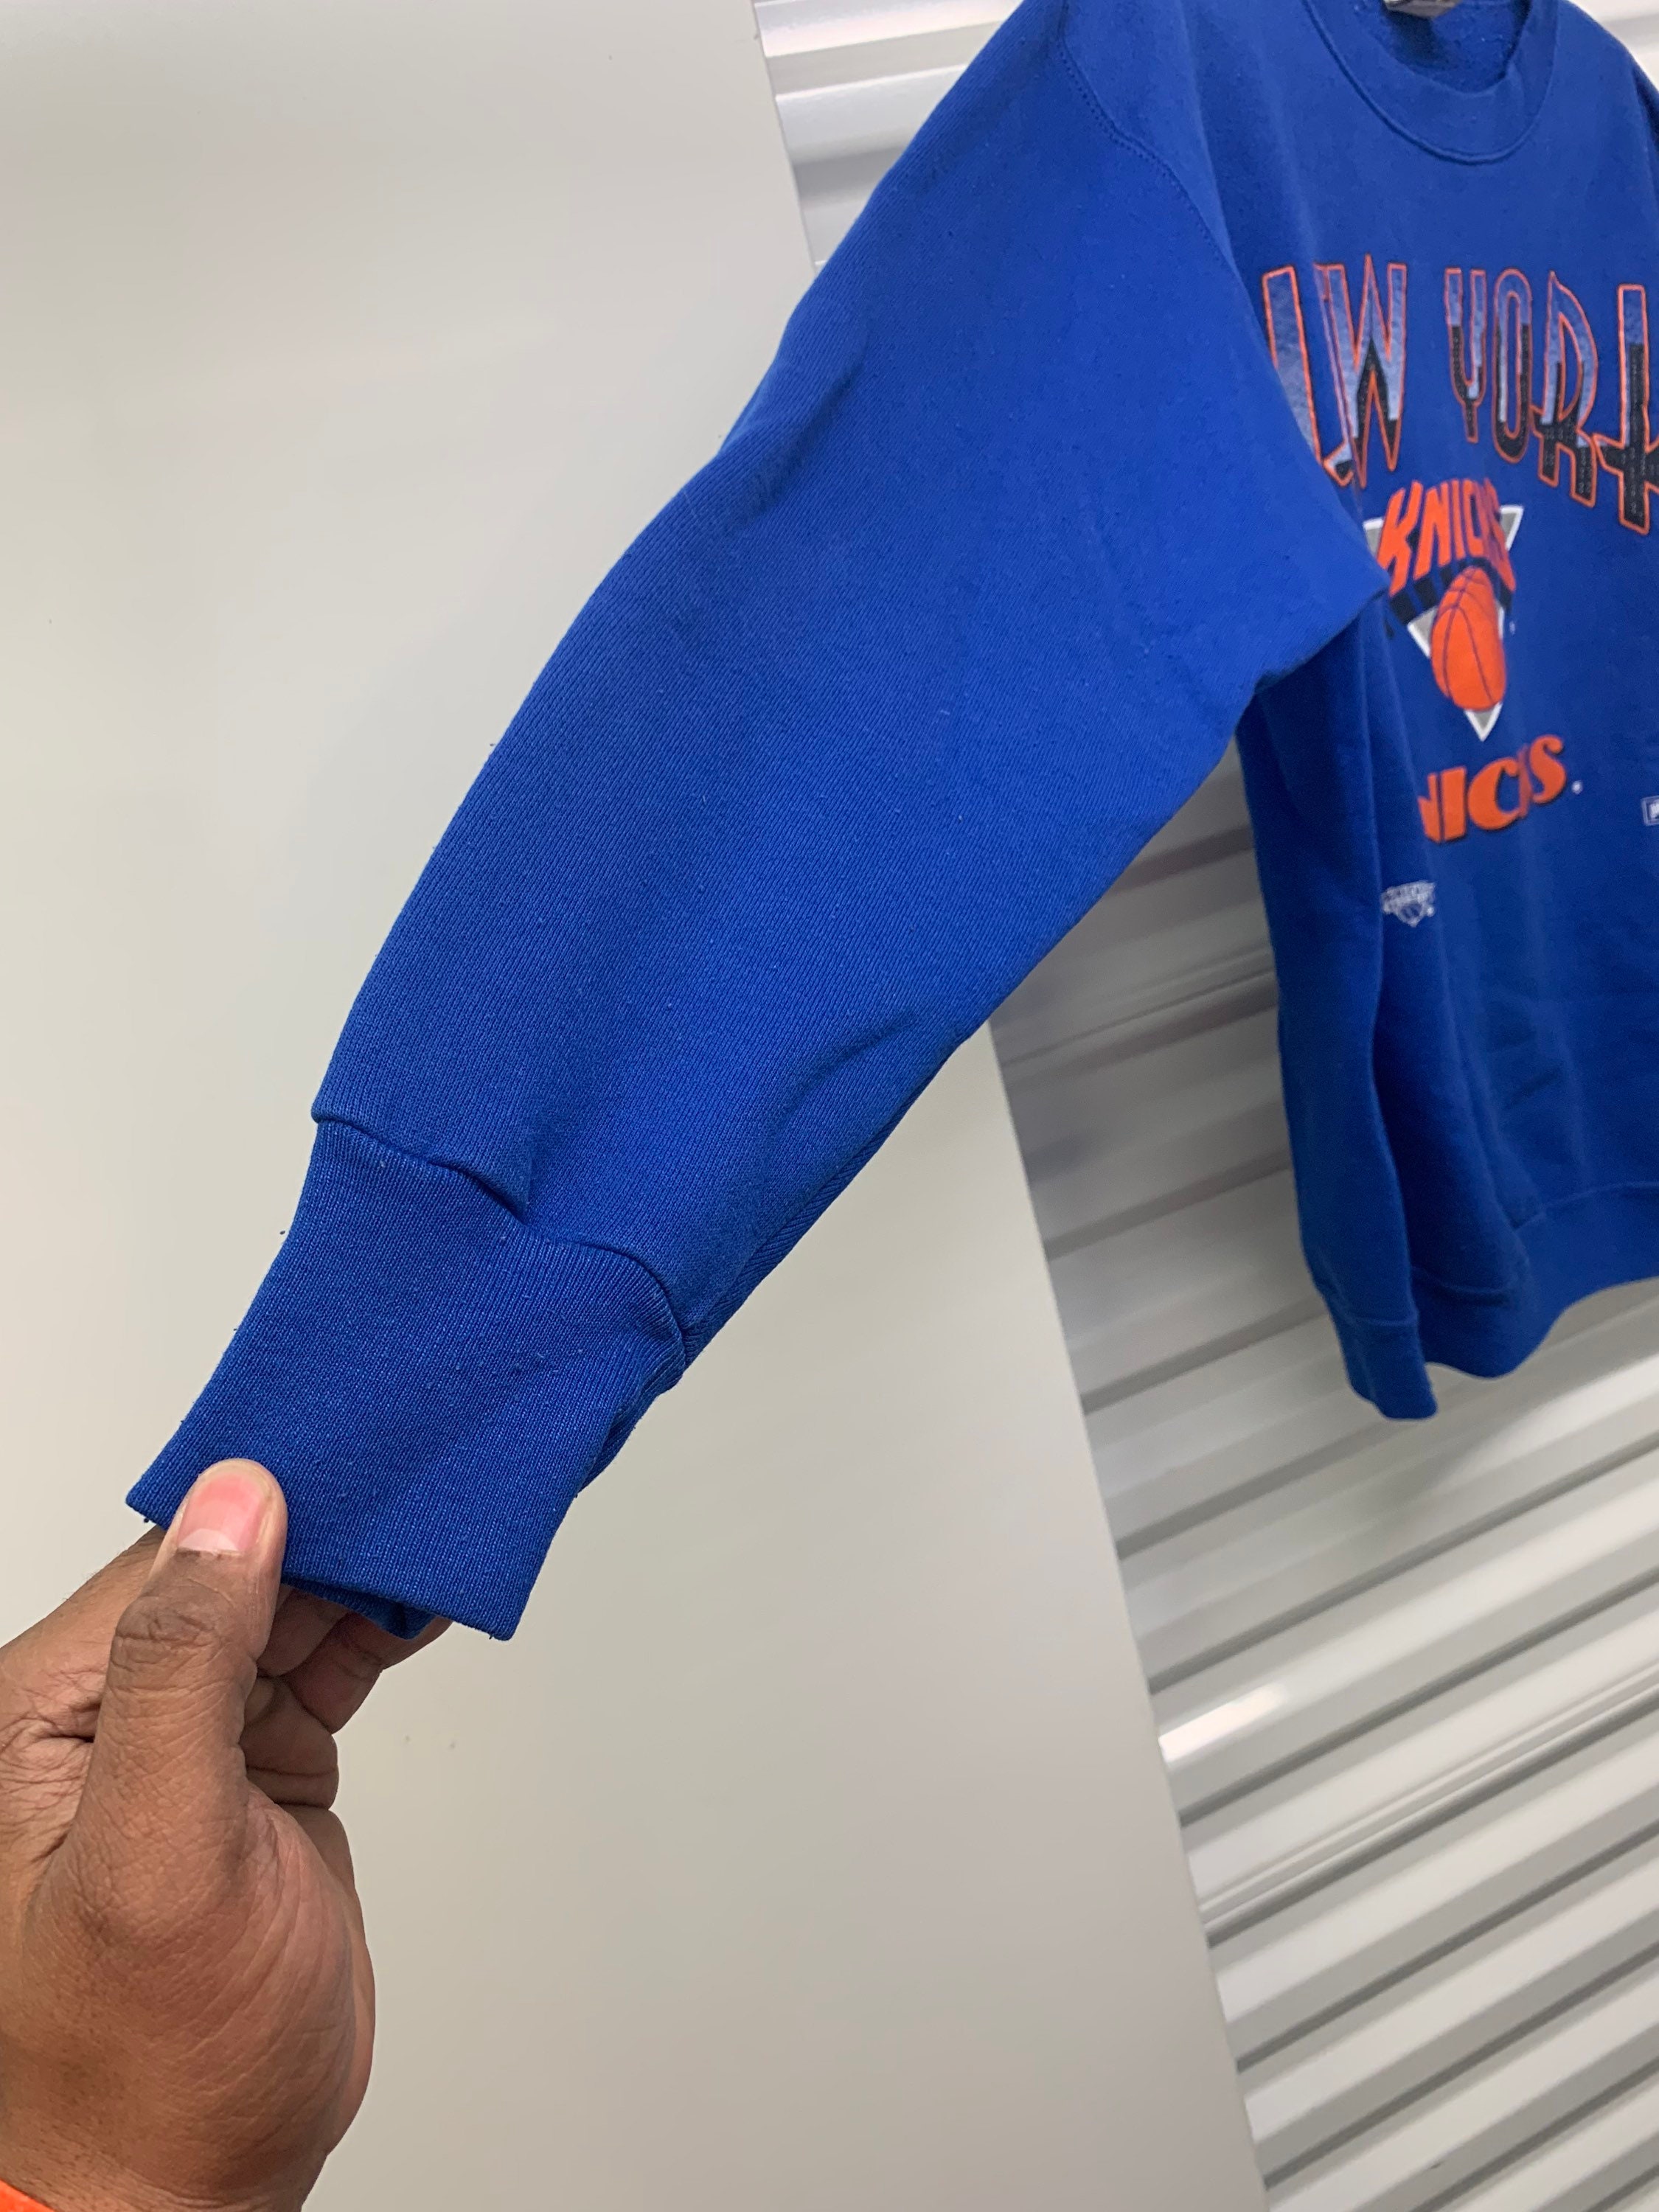 Hottertees 90s New York Vintage Knicks Sweatshirt